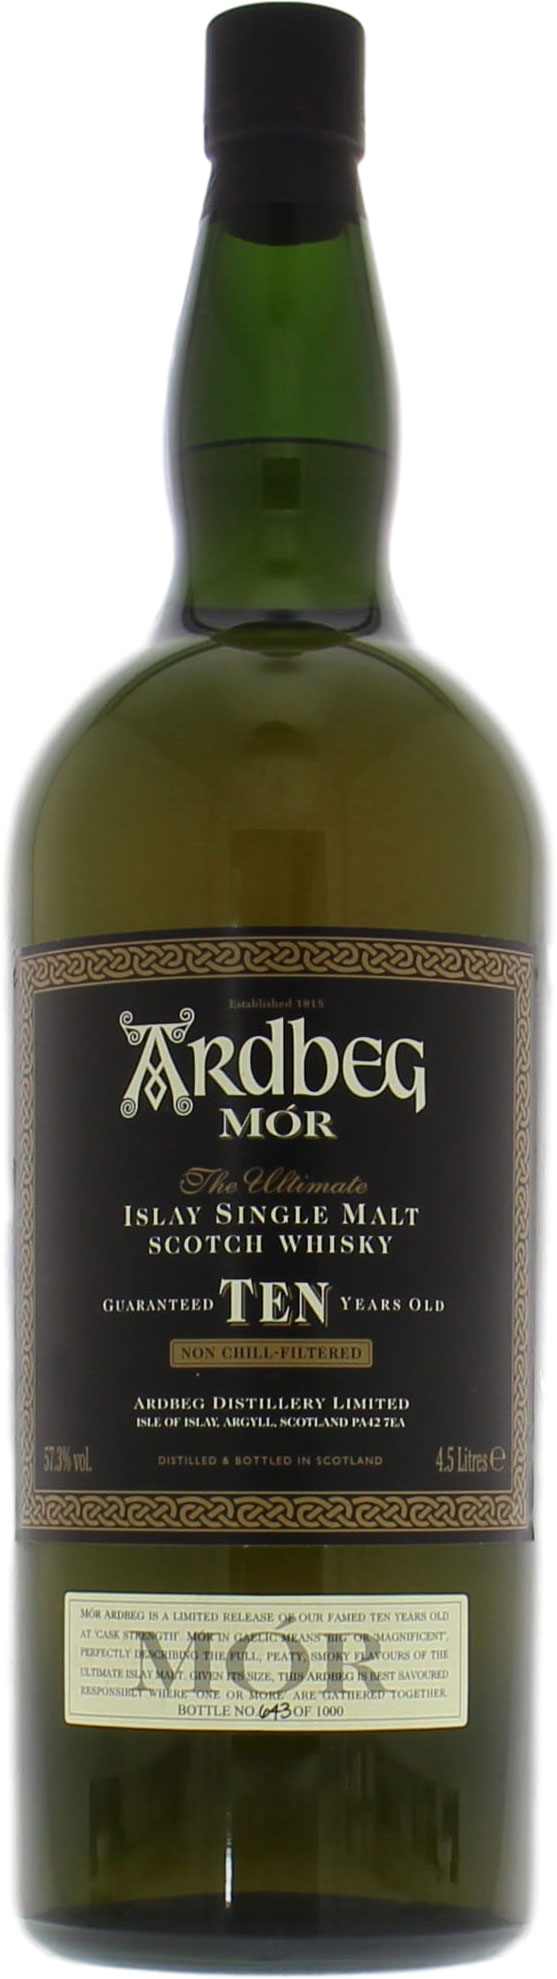 Ardbeg - Mór 10 Years Old 57.3% 1997 Perfect